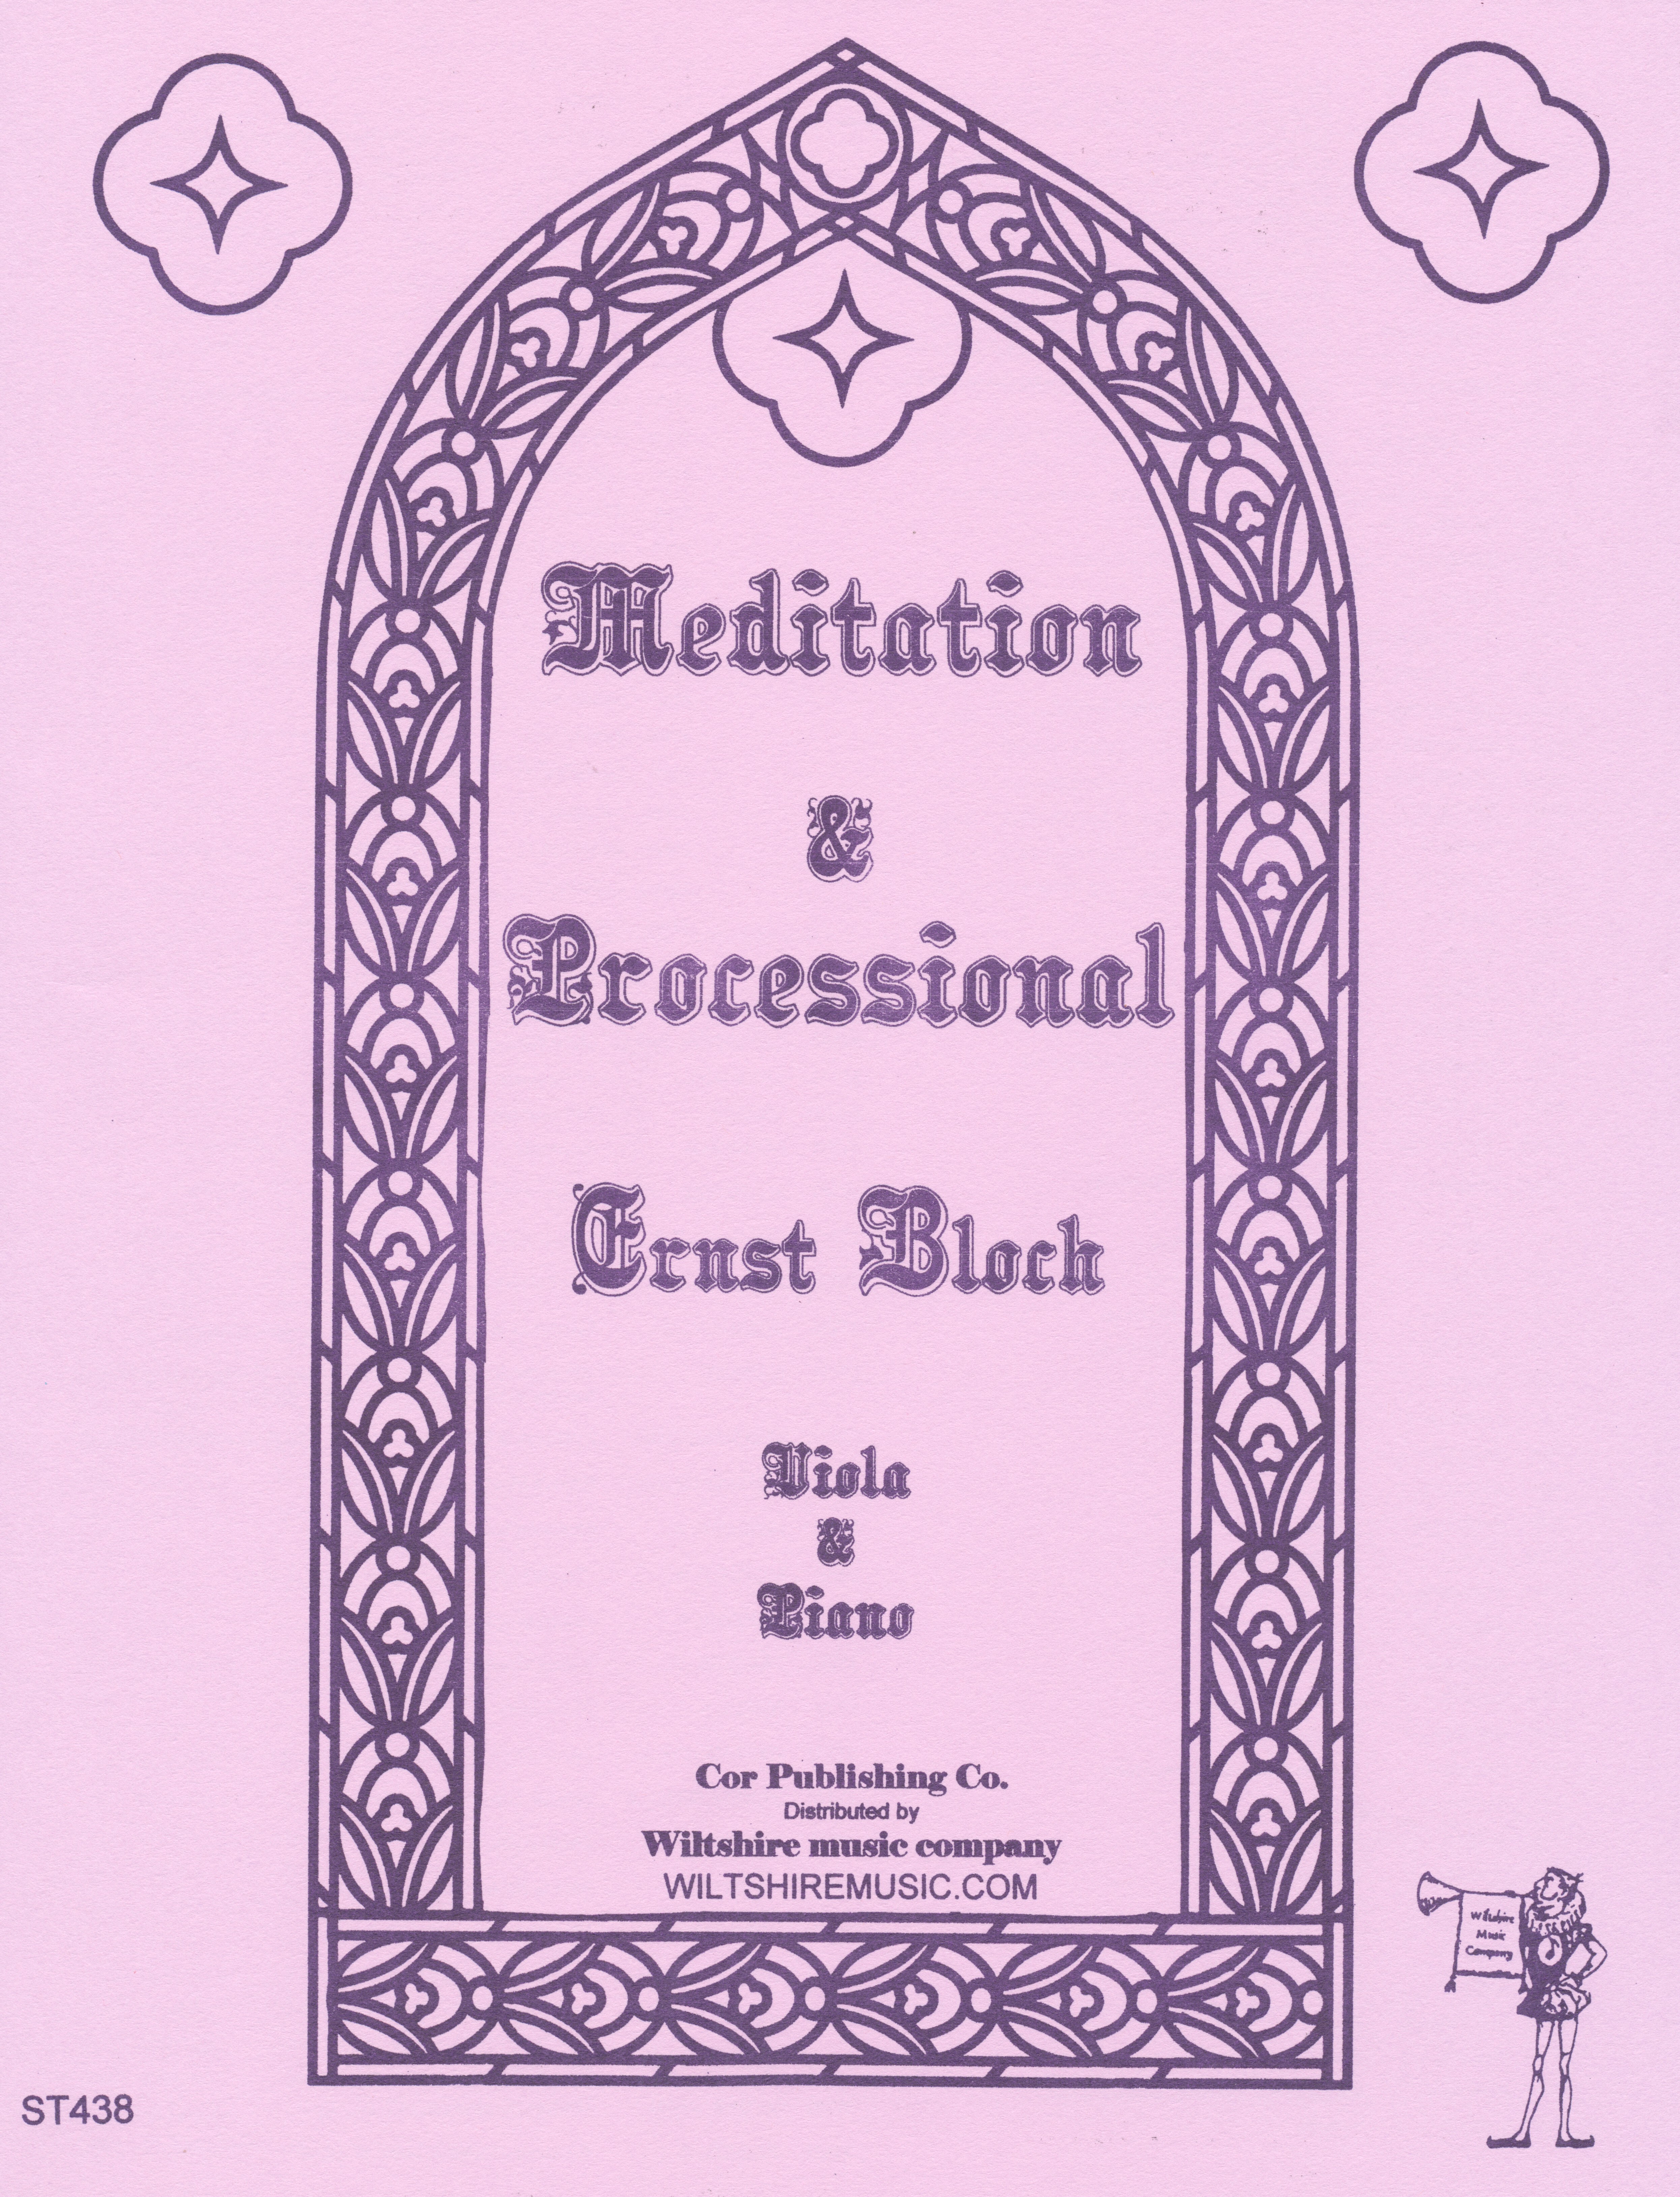 Meditation & Processional, E. Block, viola & piano